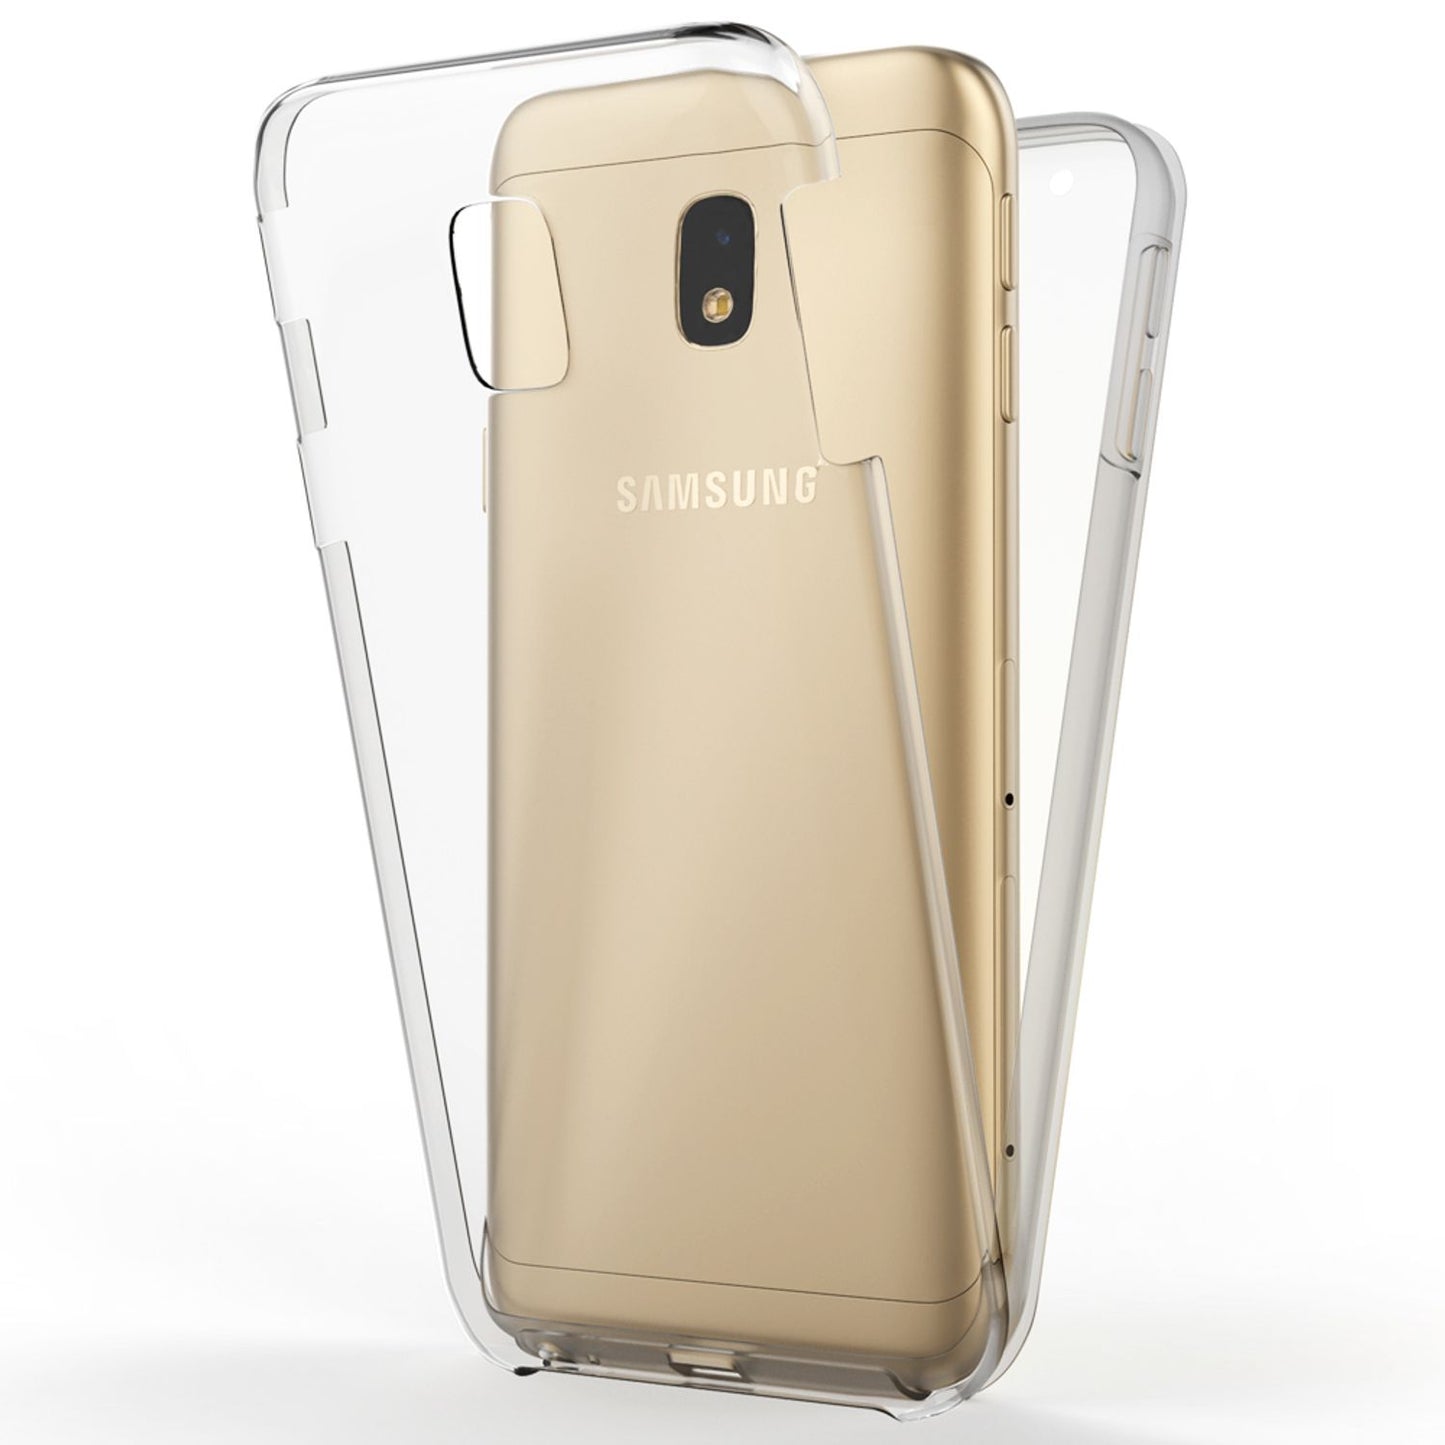 NALIA 360 Grad Handy Hülle für Samsung Galaxy J5 2017, Full Cover Case Bumper